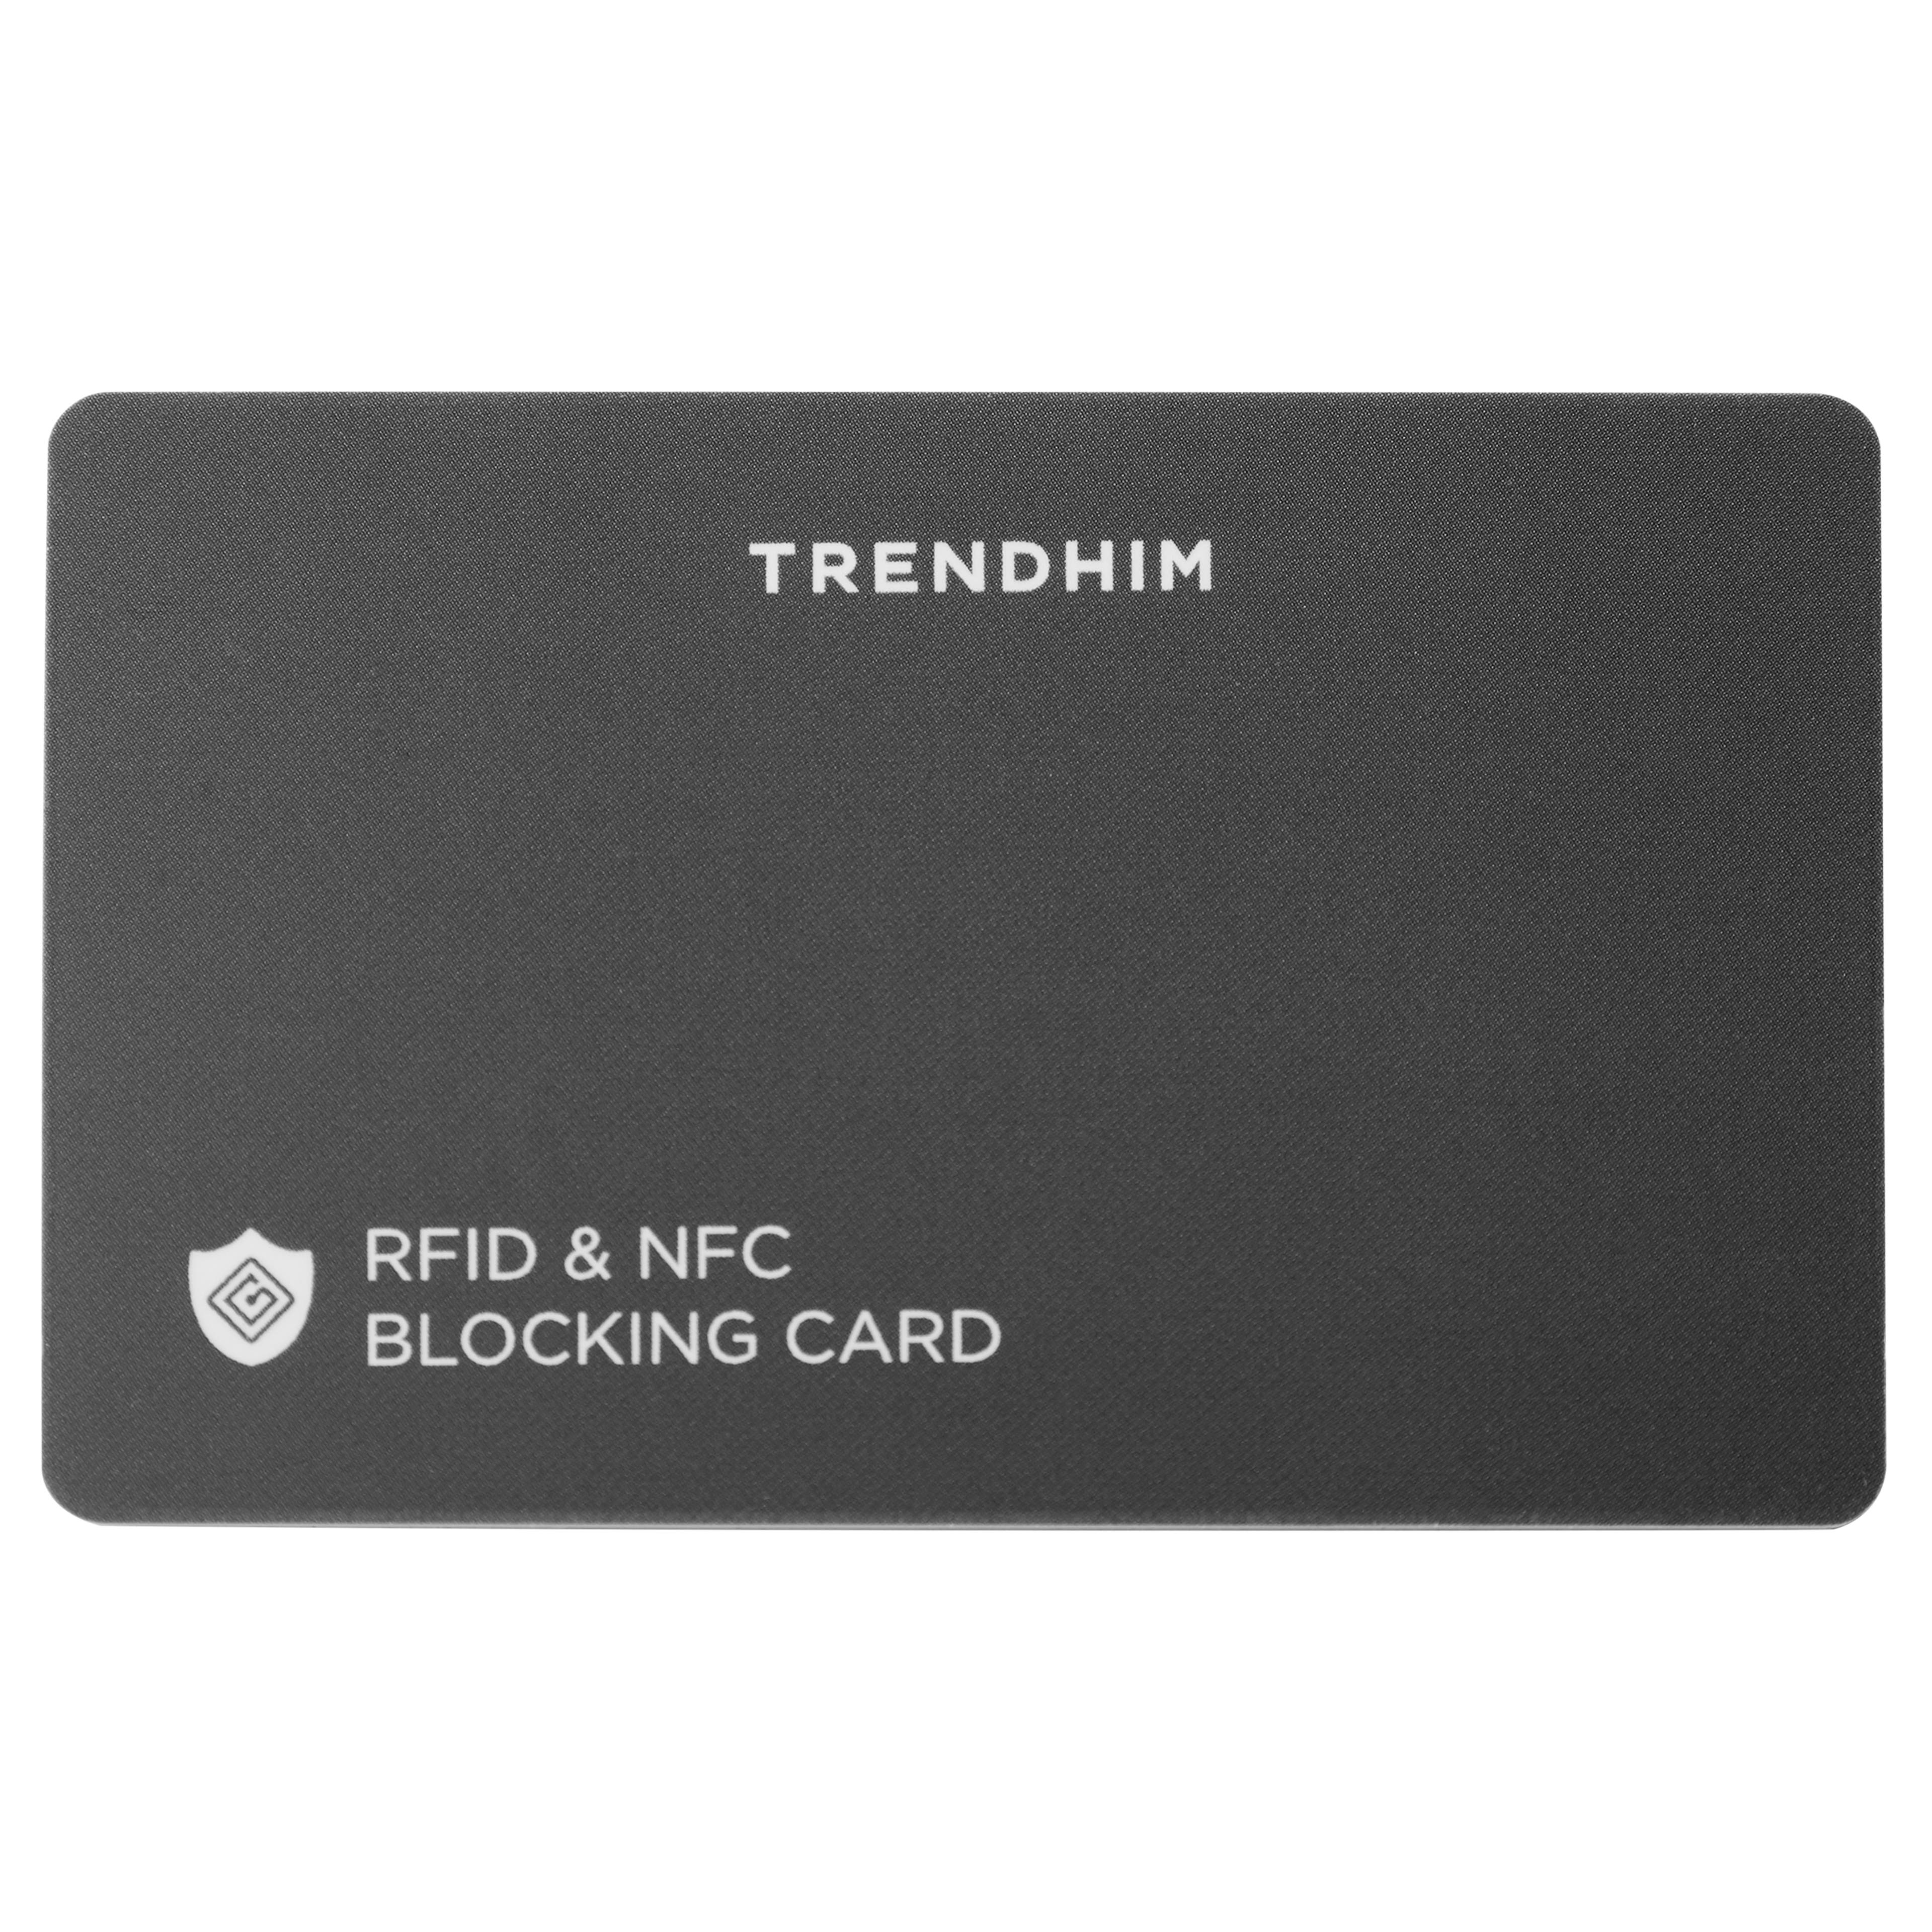 RFID & NFC Blocking Card, In stock!